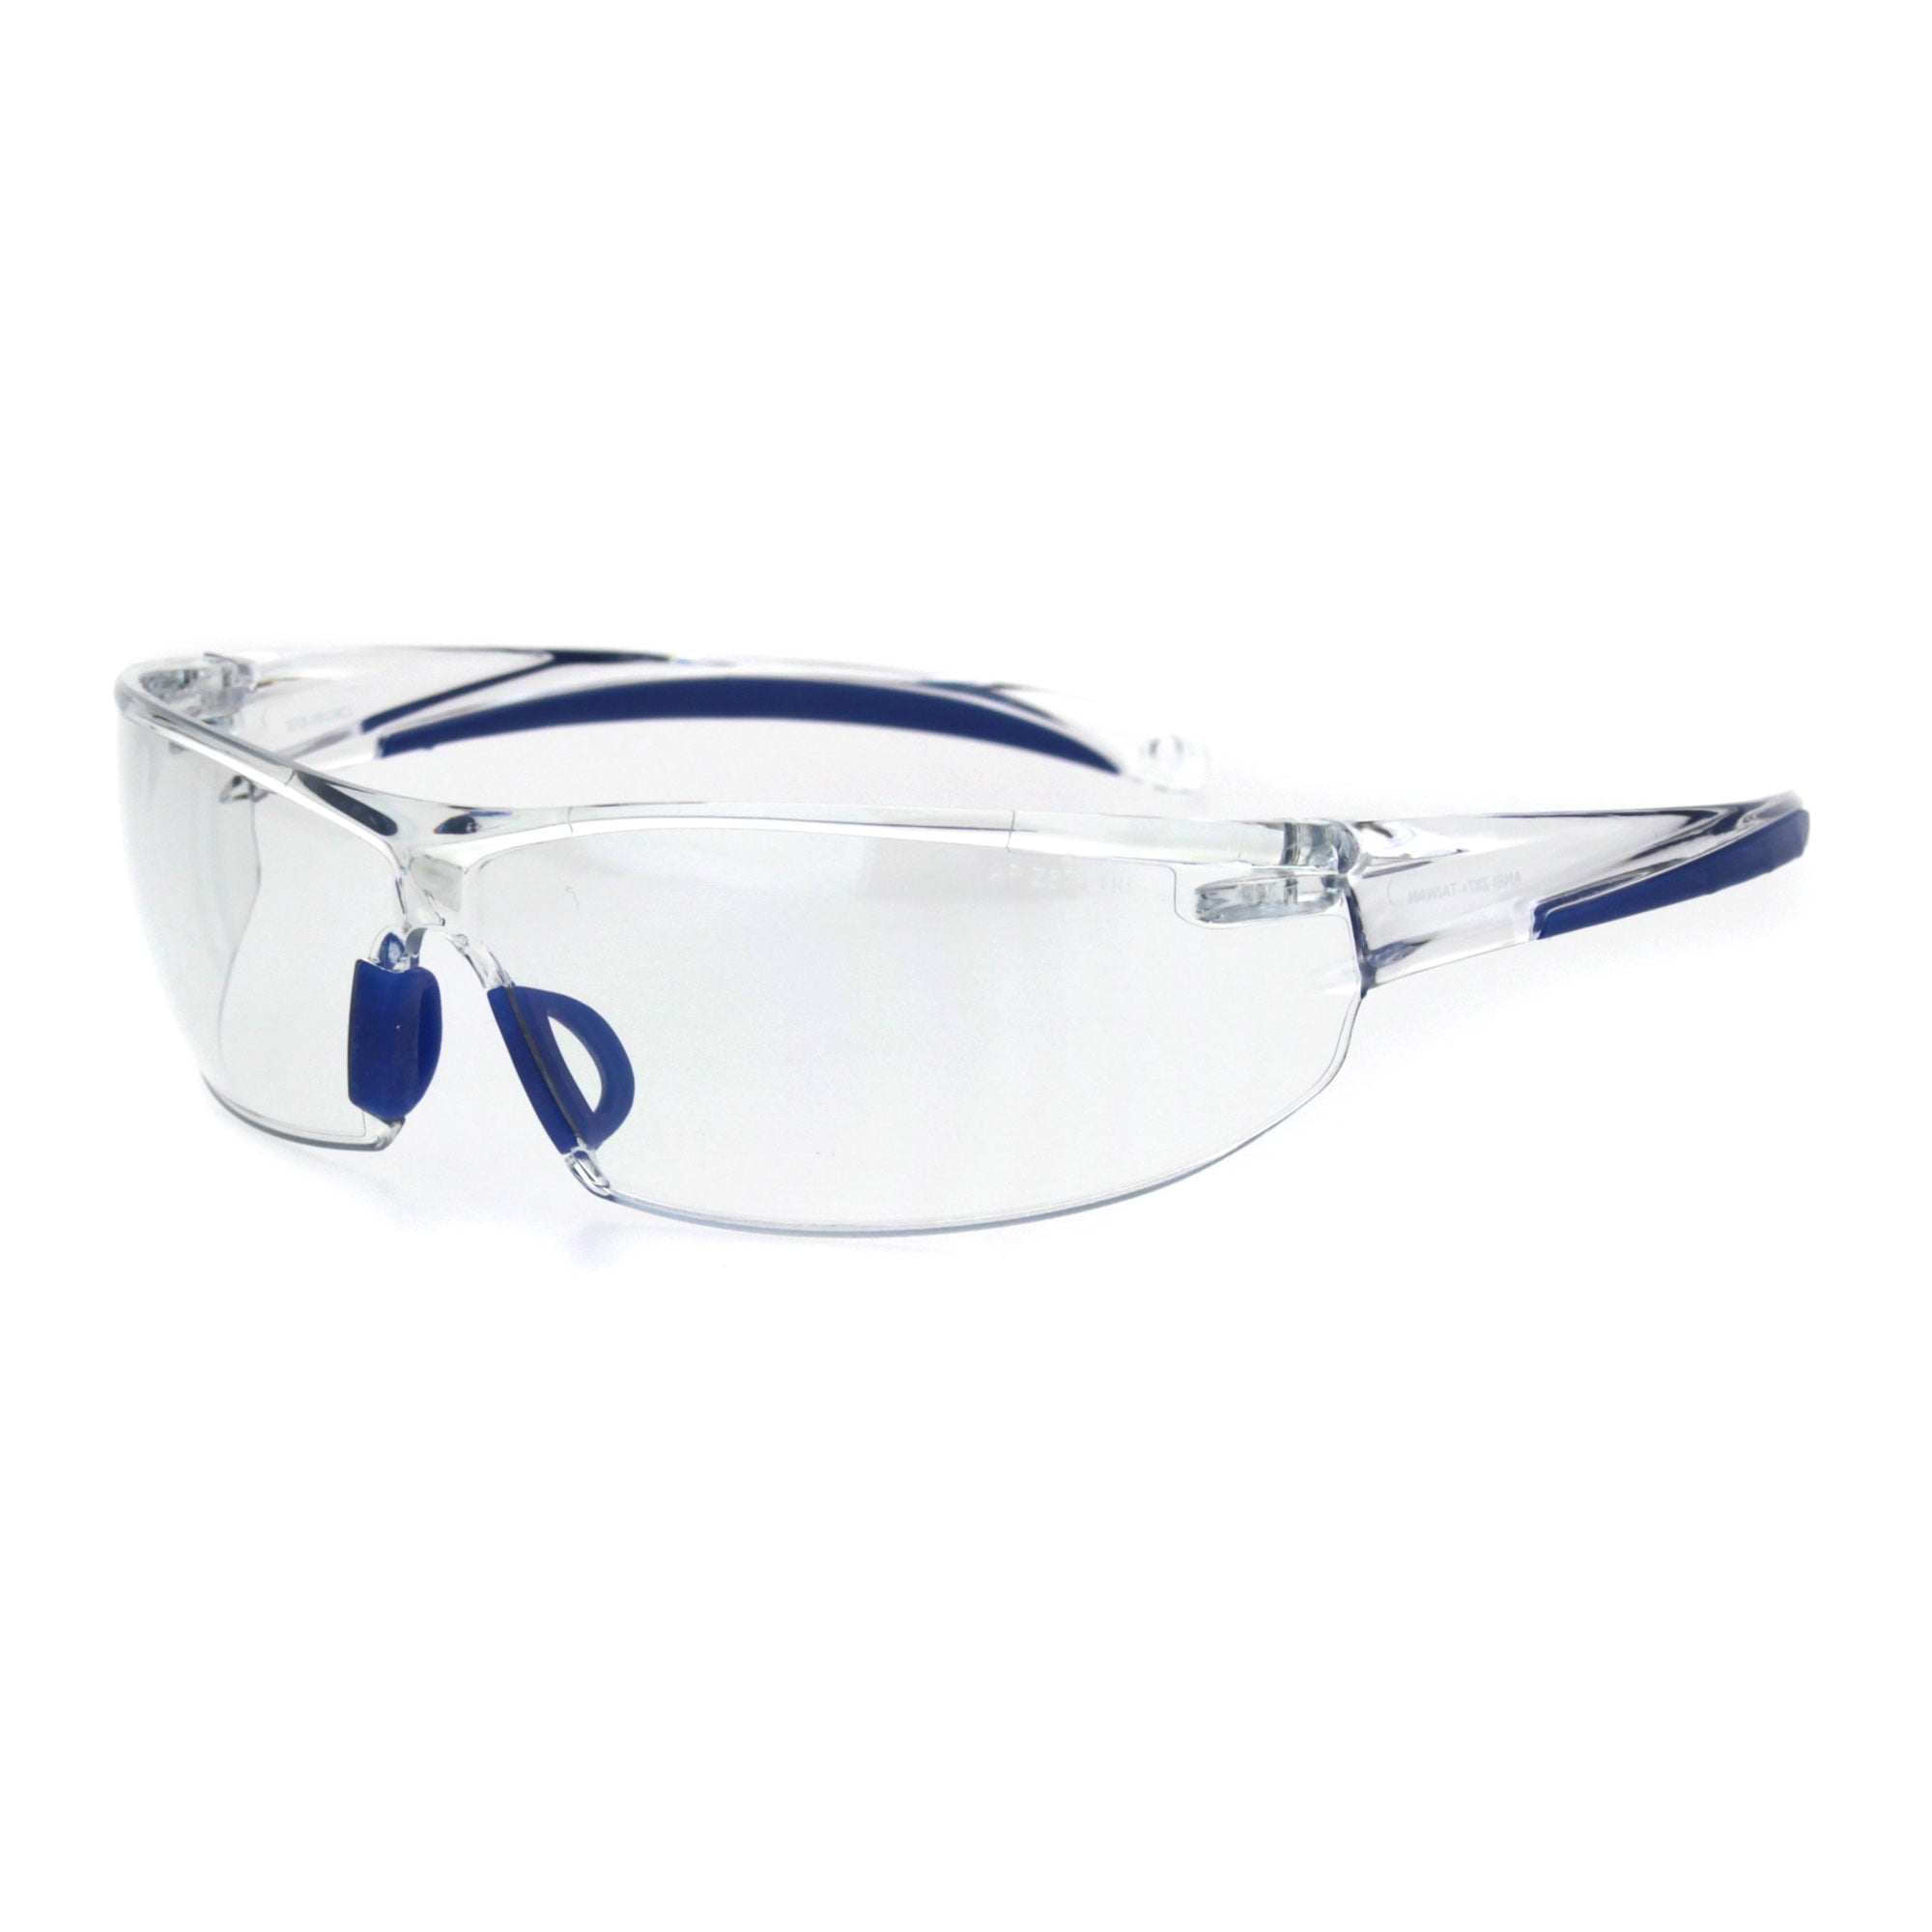 4 Pair Boss Gray Lens Expandable Safety Work Eye UV Protection Glasses ANSI Z87+ 